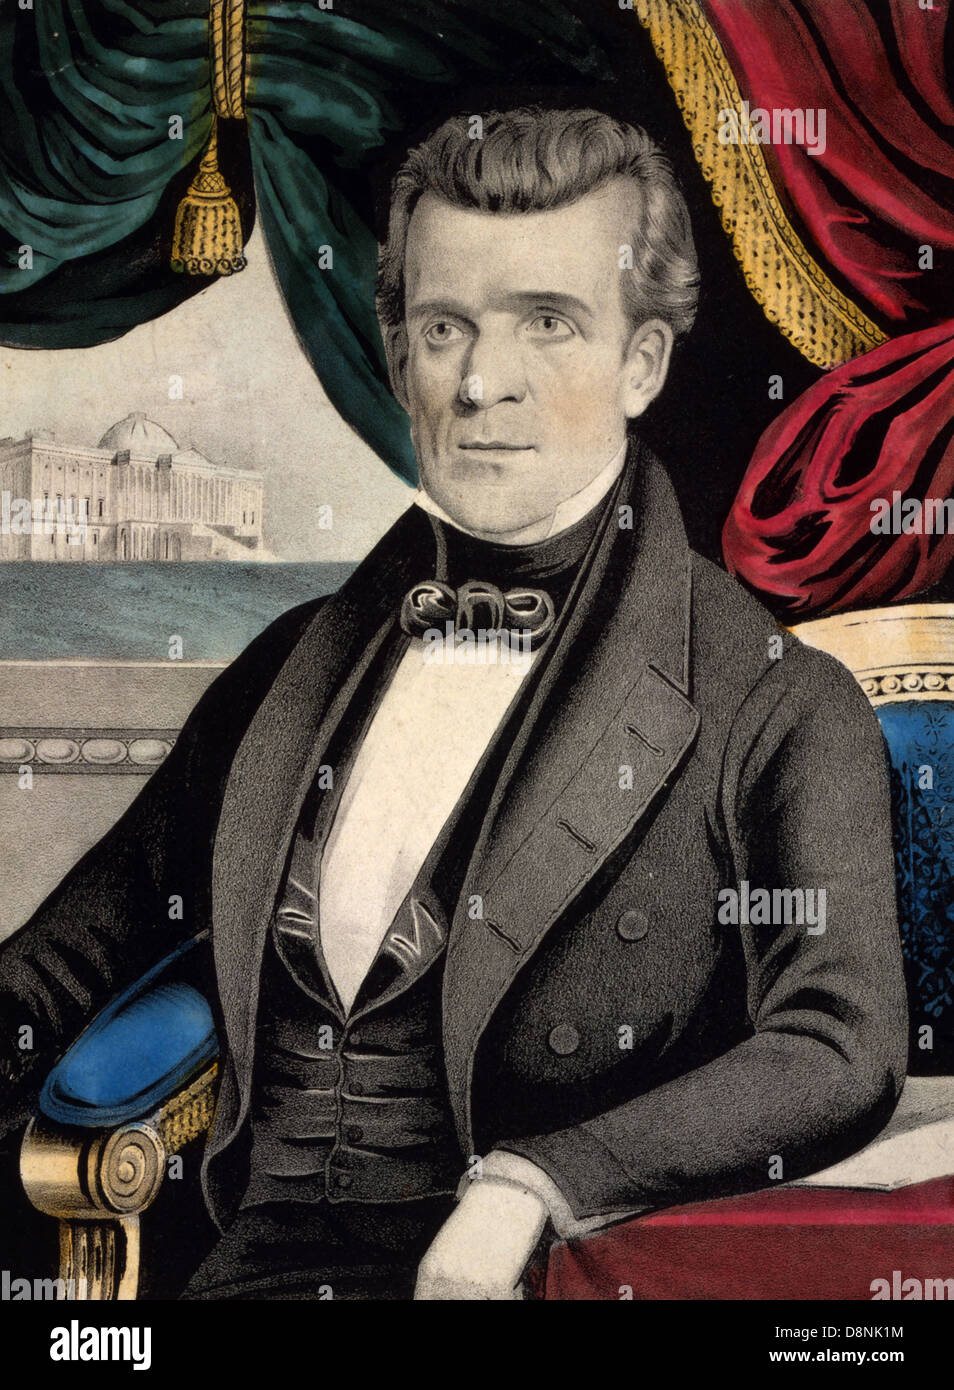 James K. Polk - eleventh president of the United States Stock Photo